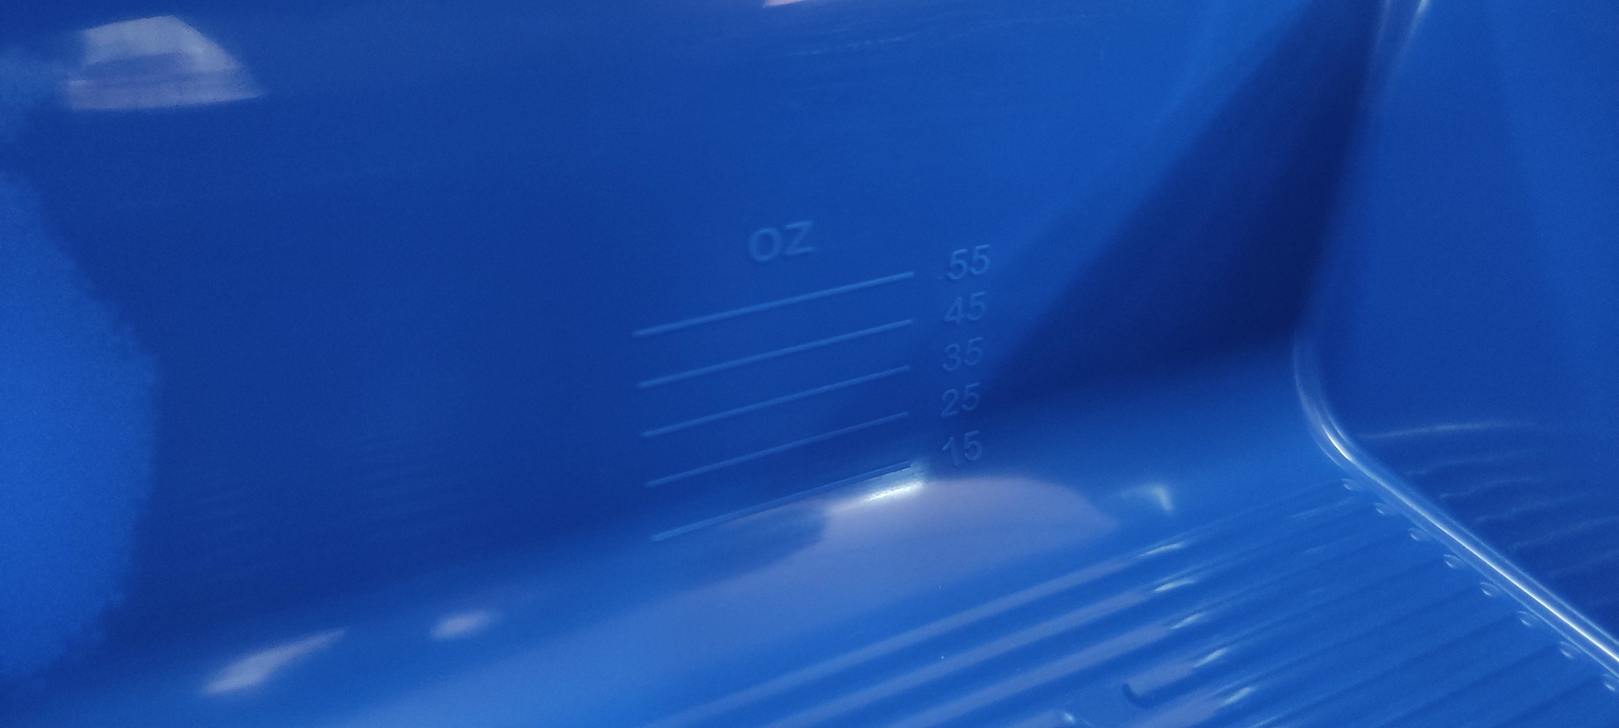 Ванночка малярная / кювета для краски, валиков 300 х 330 мм STORCH Prof, пластмассовая								